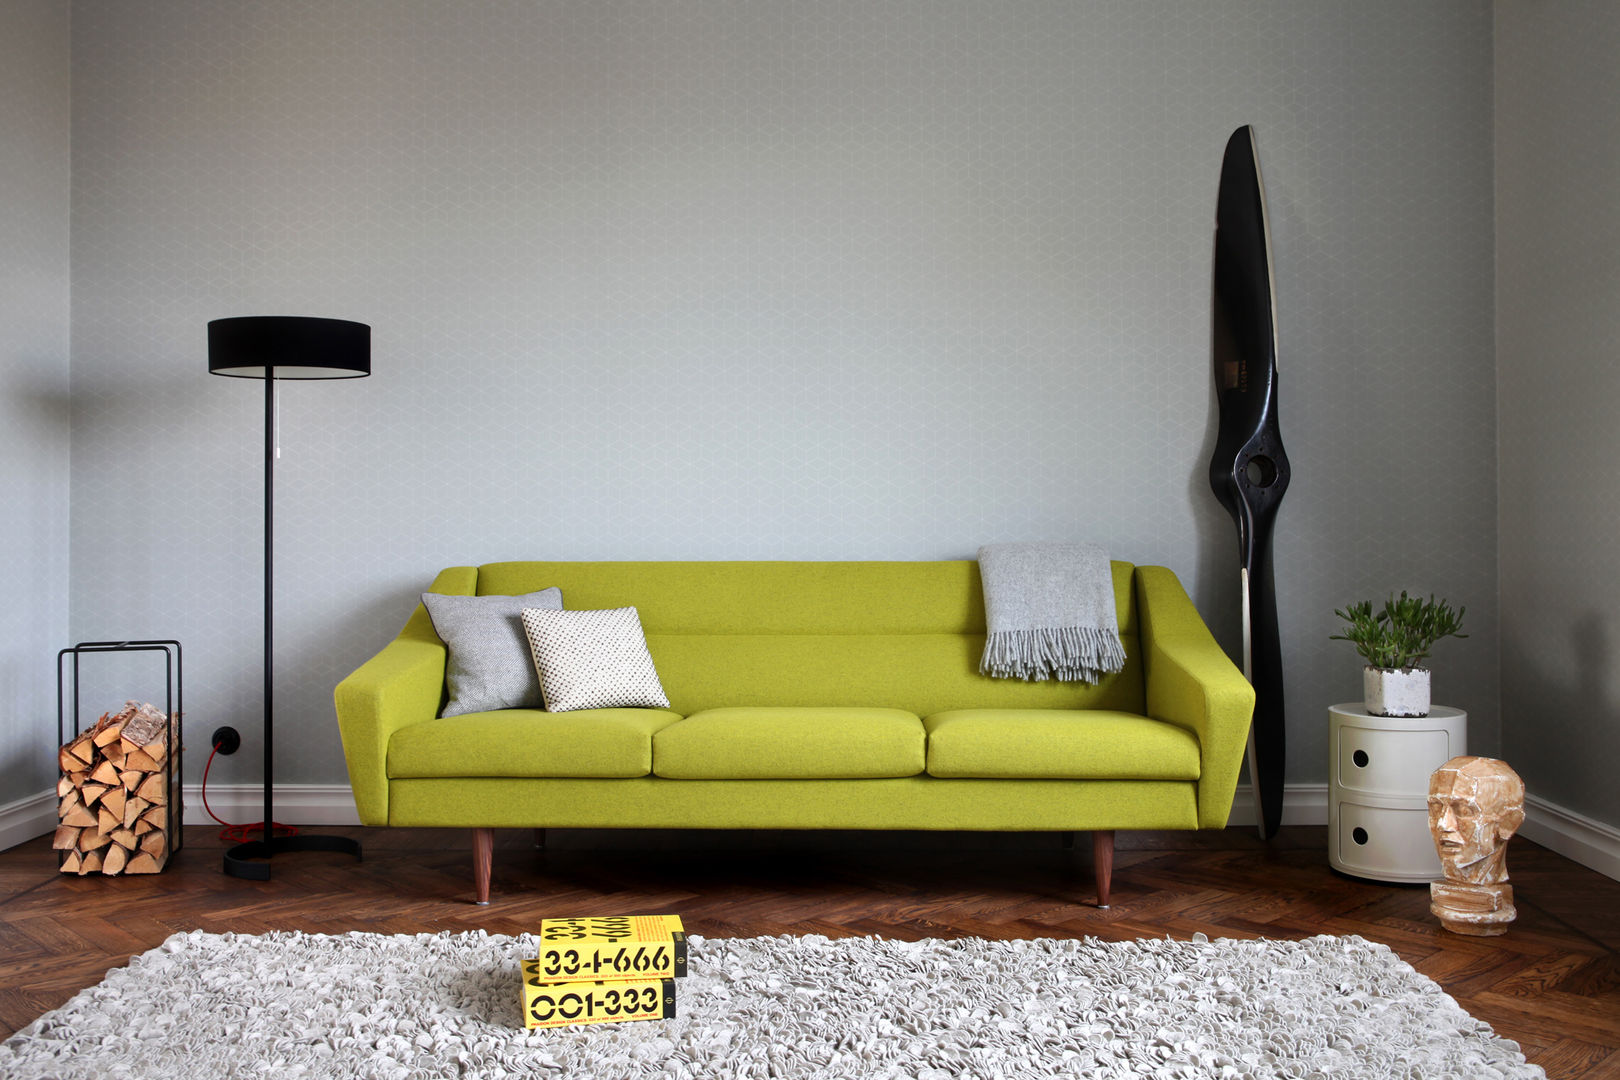 Wohnzimmer skandinavisch einrichten, Baltic Design Shop Baltic Design Shop Ruang Keluarga Modern Sofas & armchairs